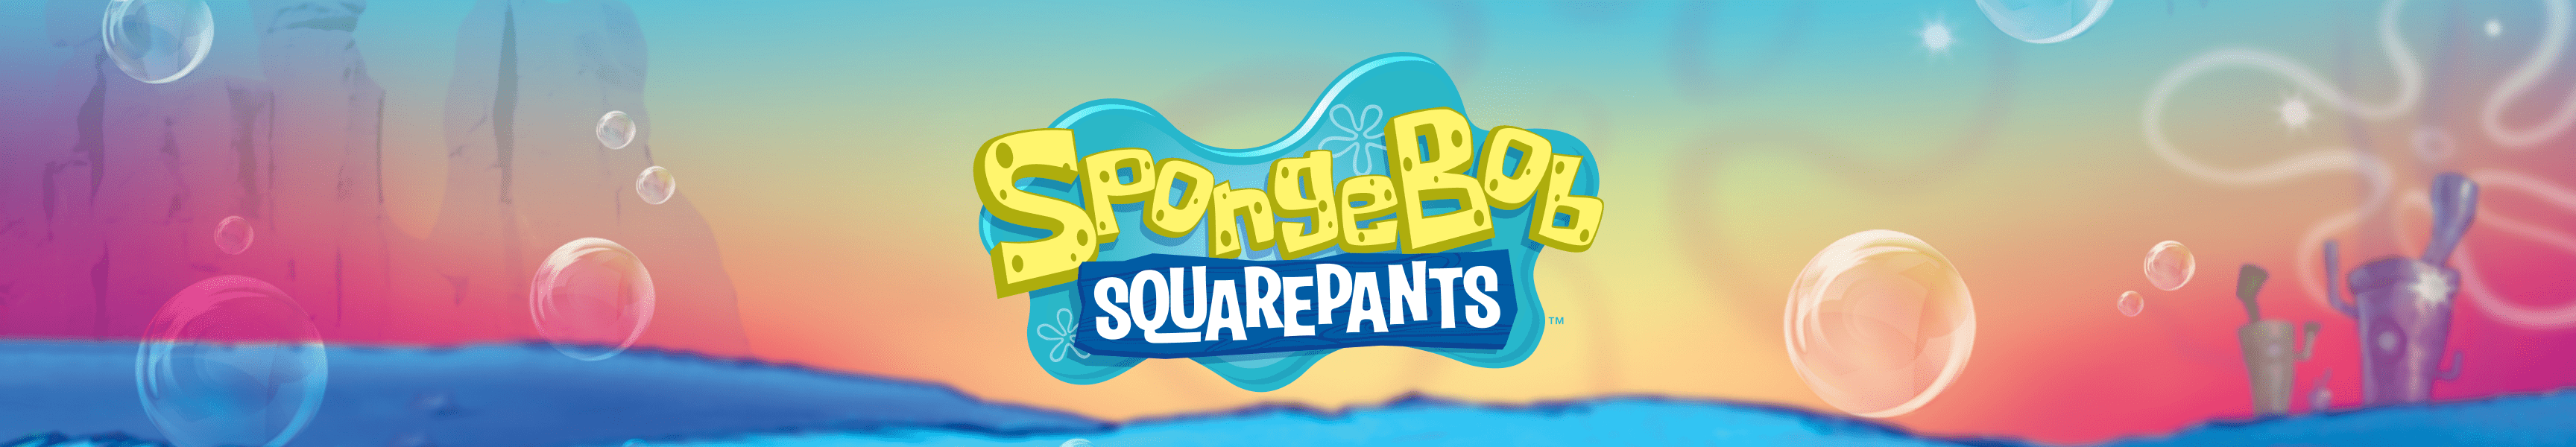 SpongeBob SquarePants Toys & Collectibles